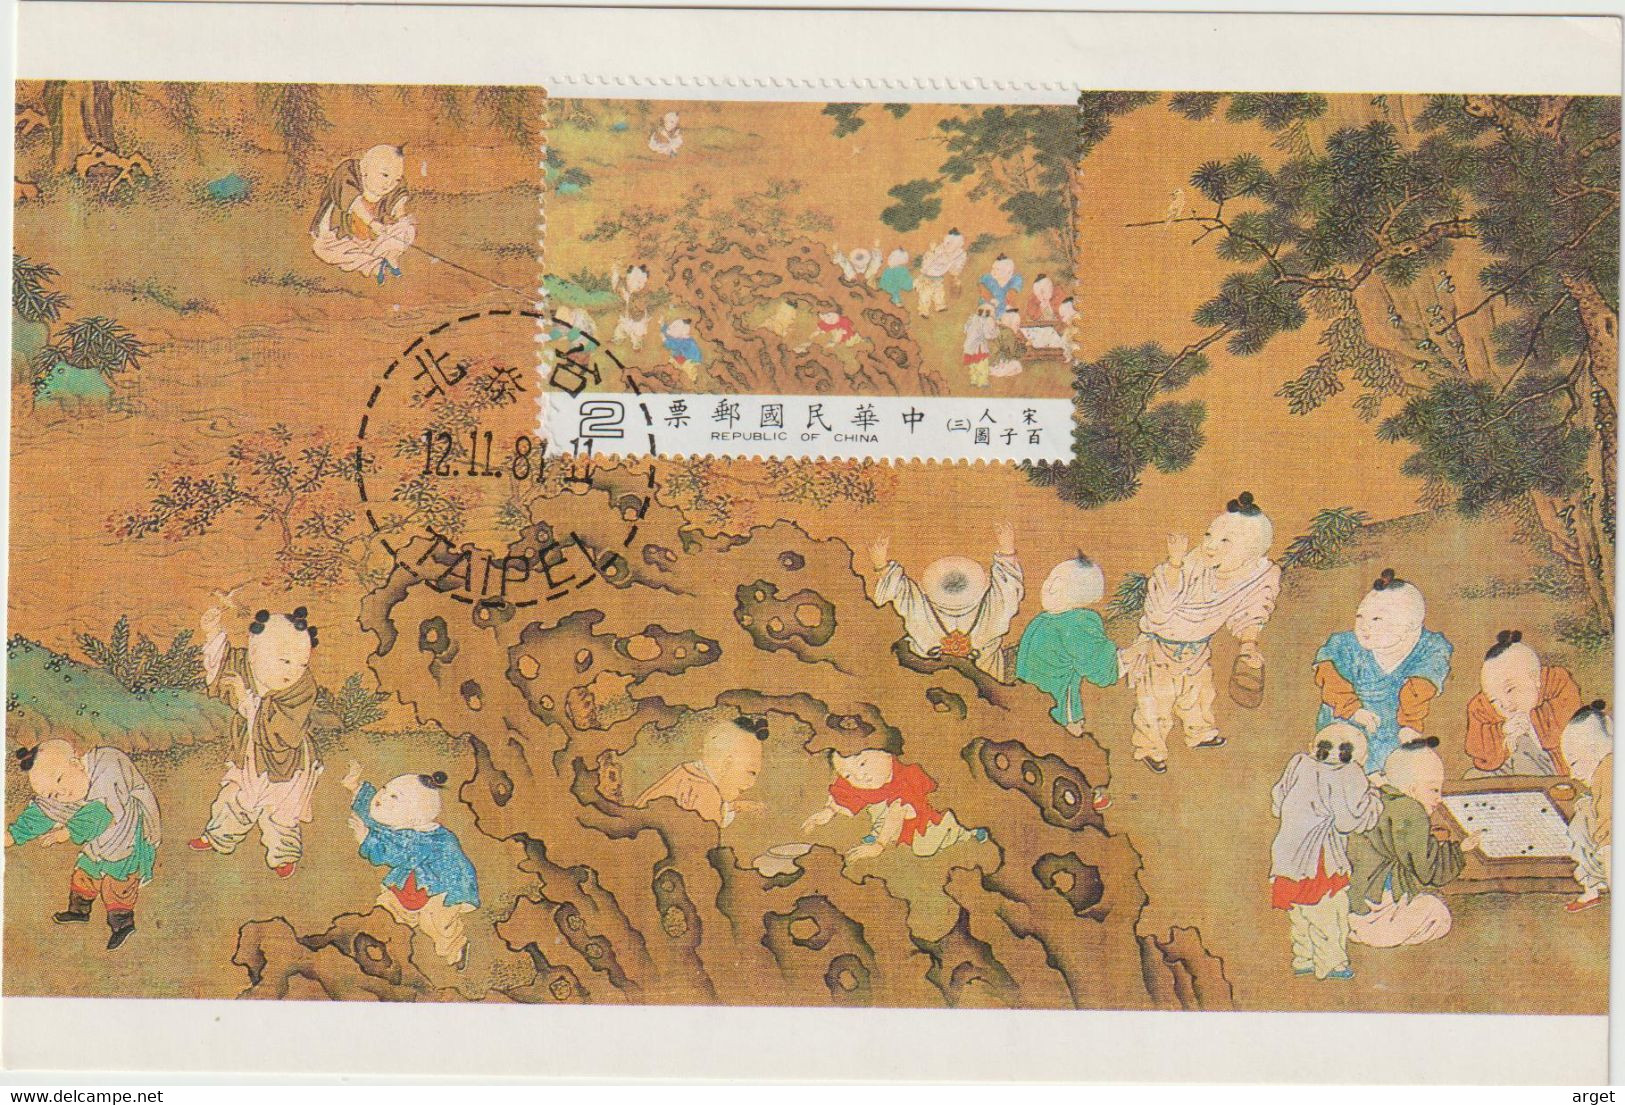 Carte Maximum TAIWAN N°Yvert 1385 (Musée Taipeh- Peinture Ancienne Chinoise) Obl Sp 1er Jour - Cartes-maximum